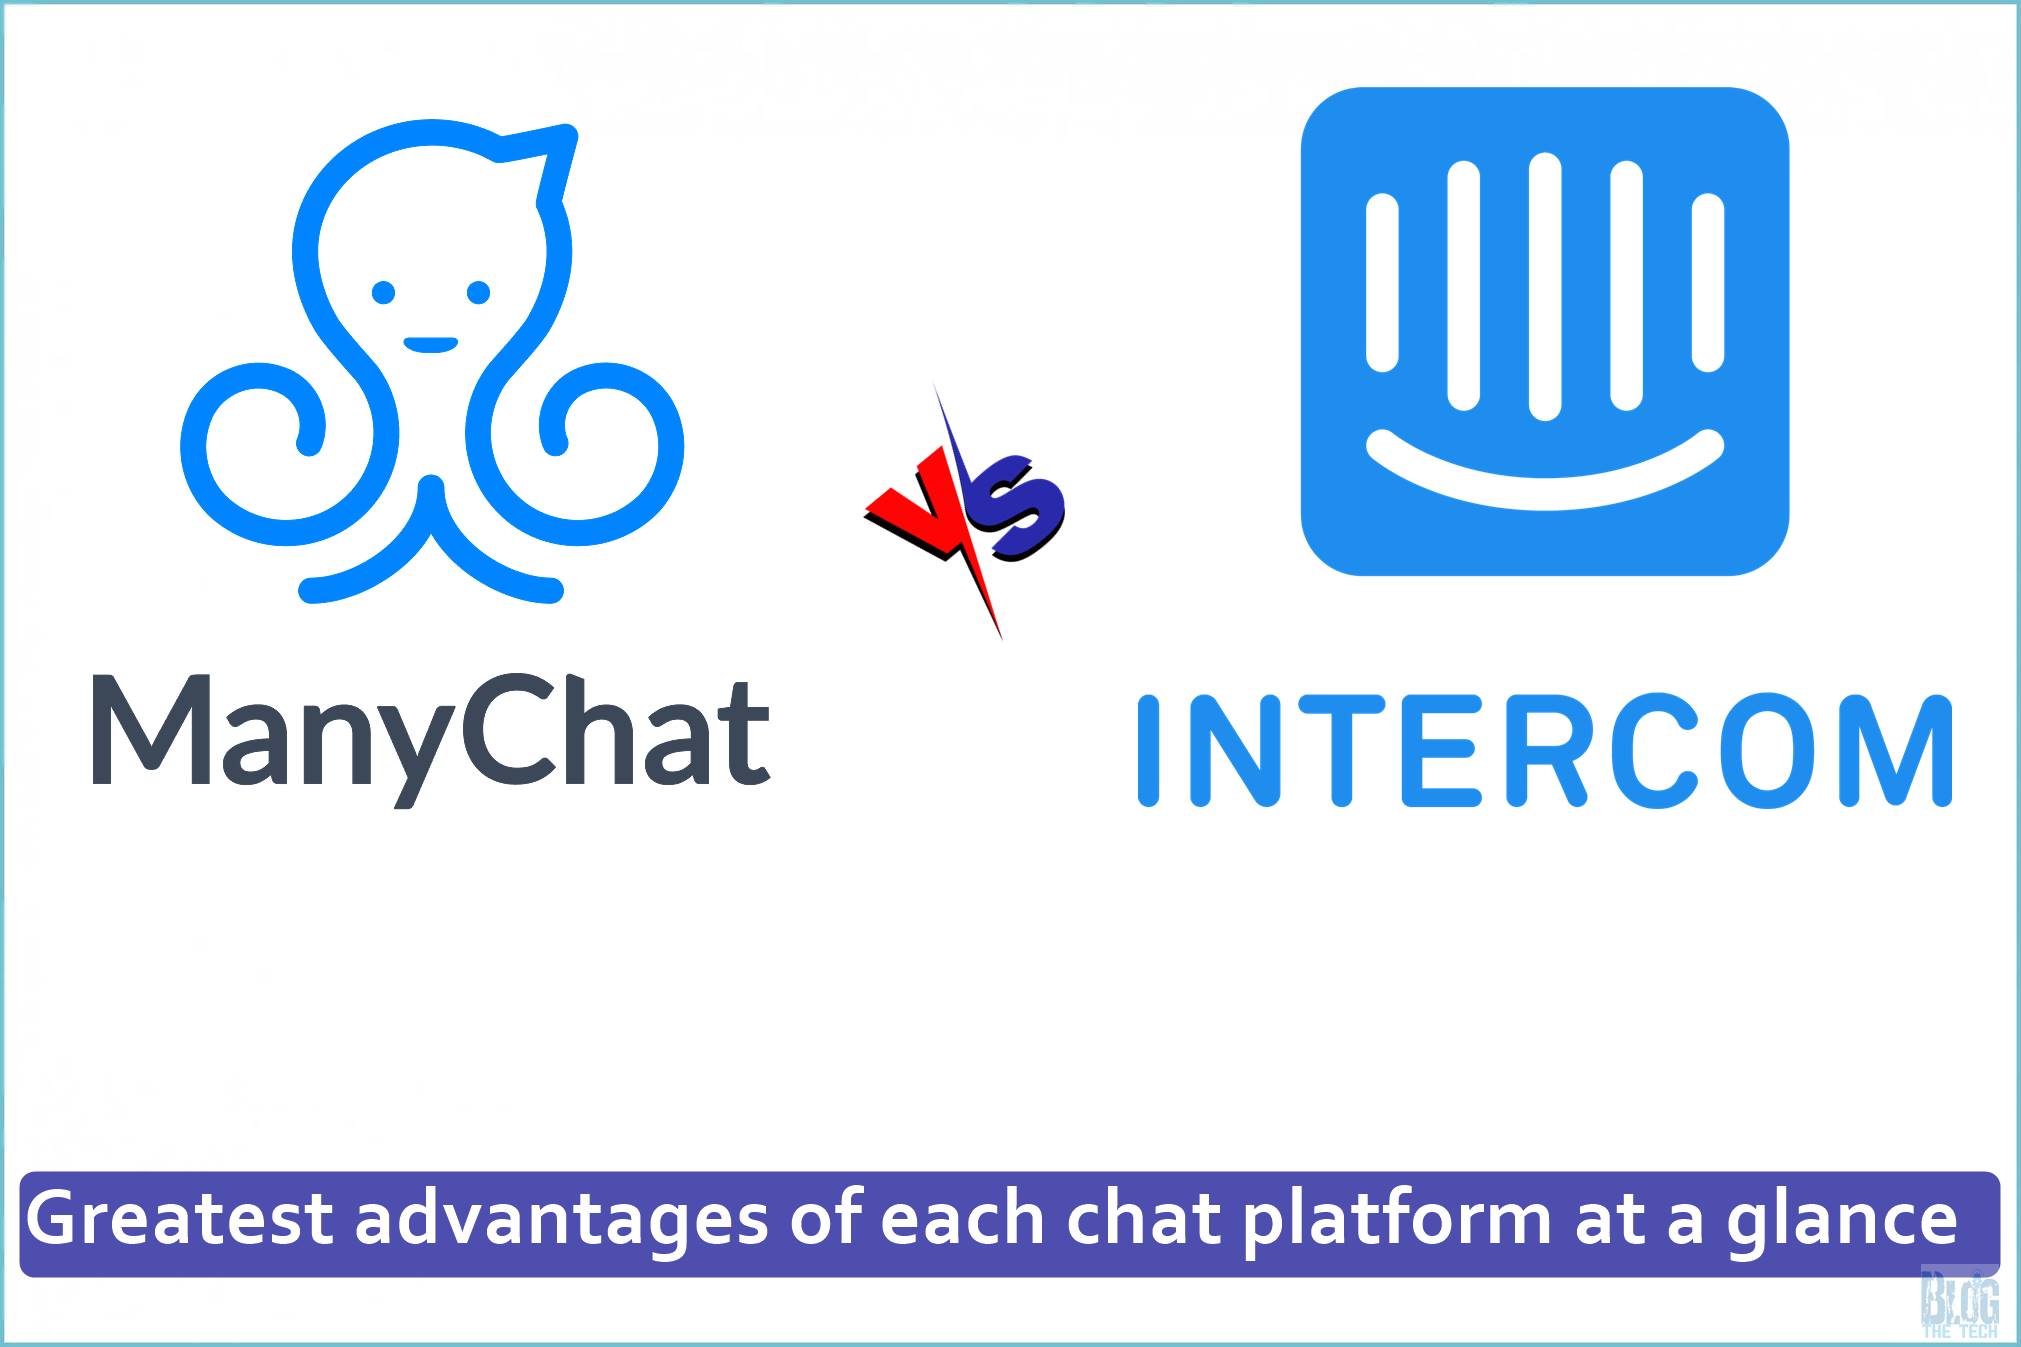 Manychat vs. Intercom comparison – Greatest advantages of each chat platform at a glance